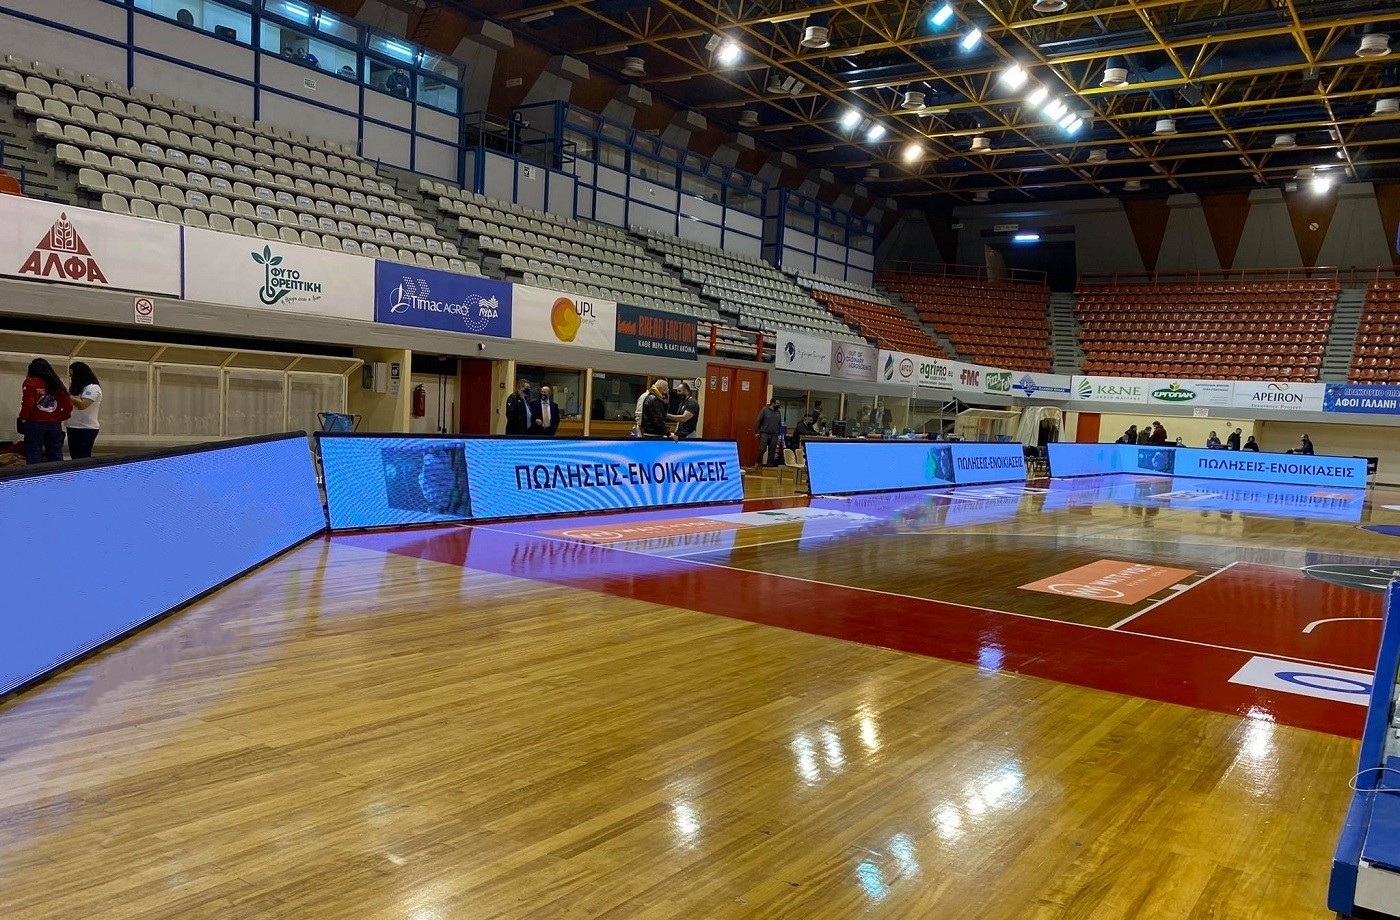 P10 outdoor perimeter LED screen in basketball stadium, Greece